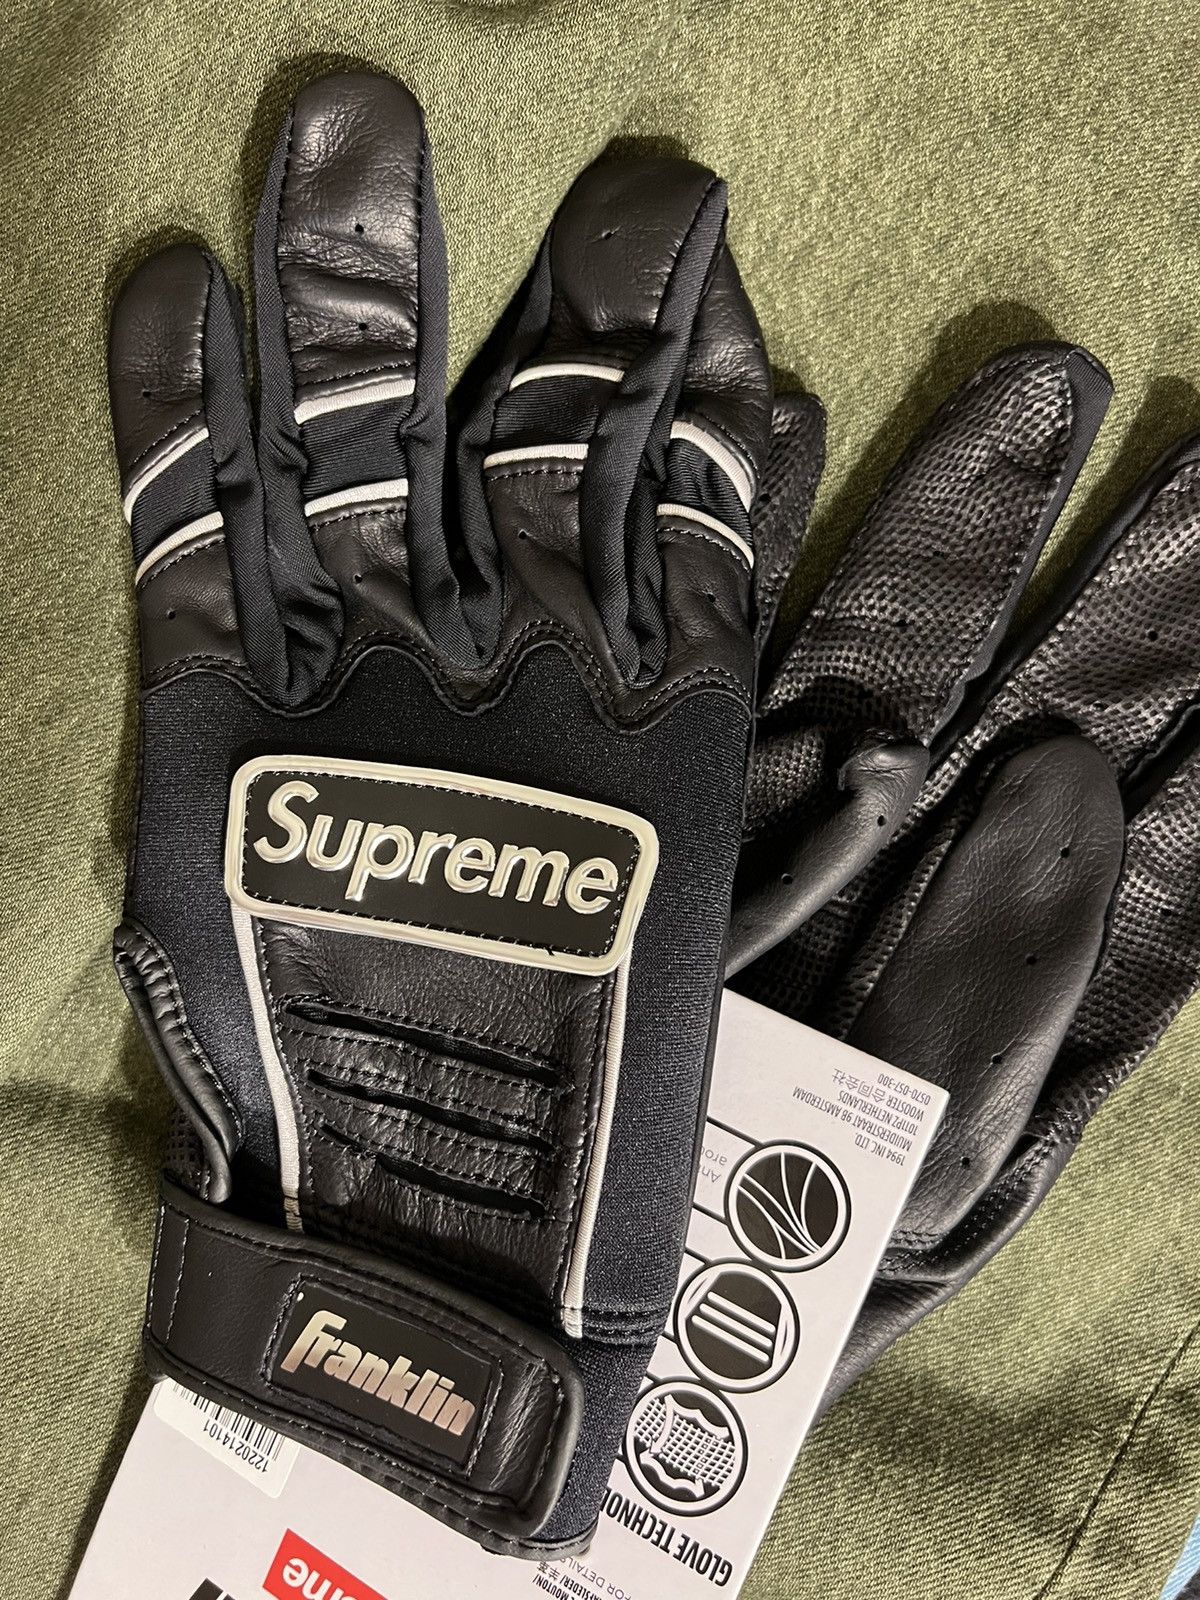 Supreme Supreme Franklin cfx pro batting glove | Grailed